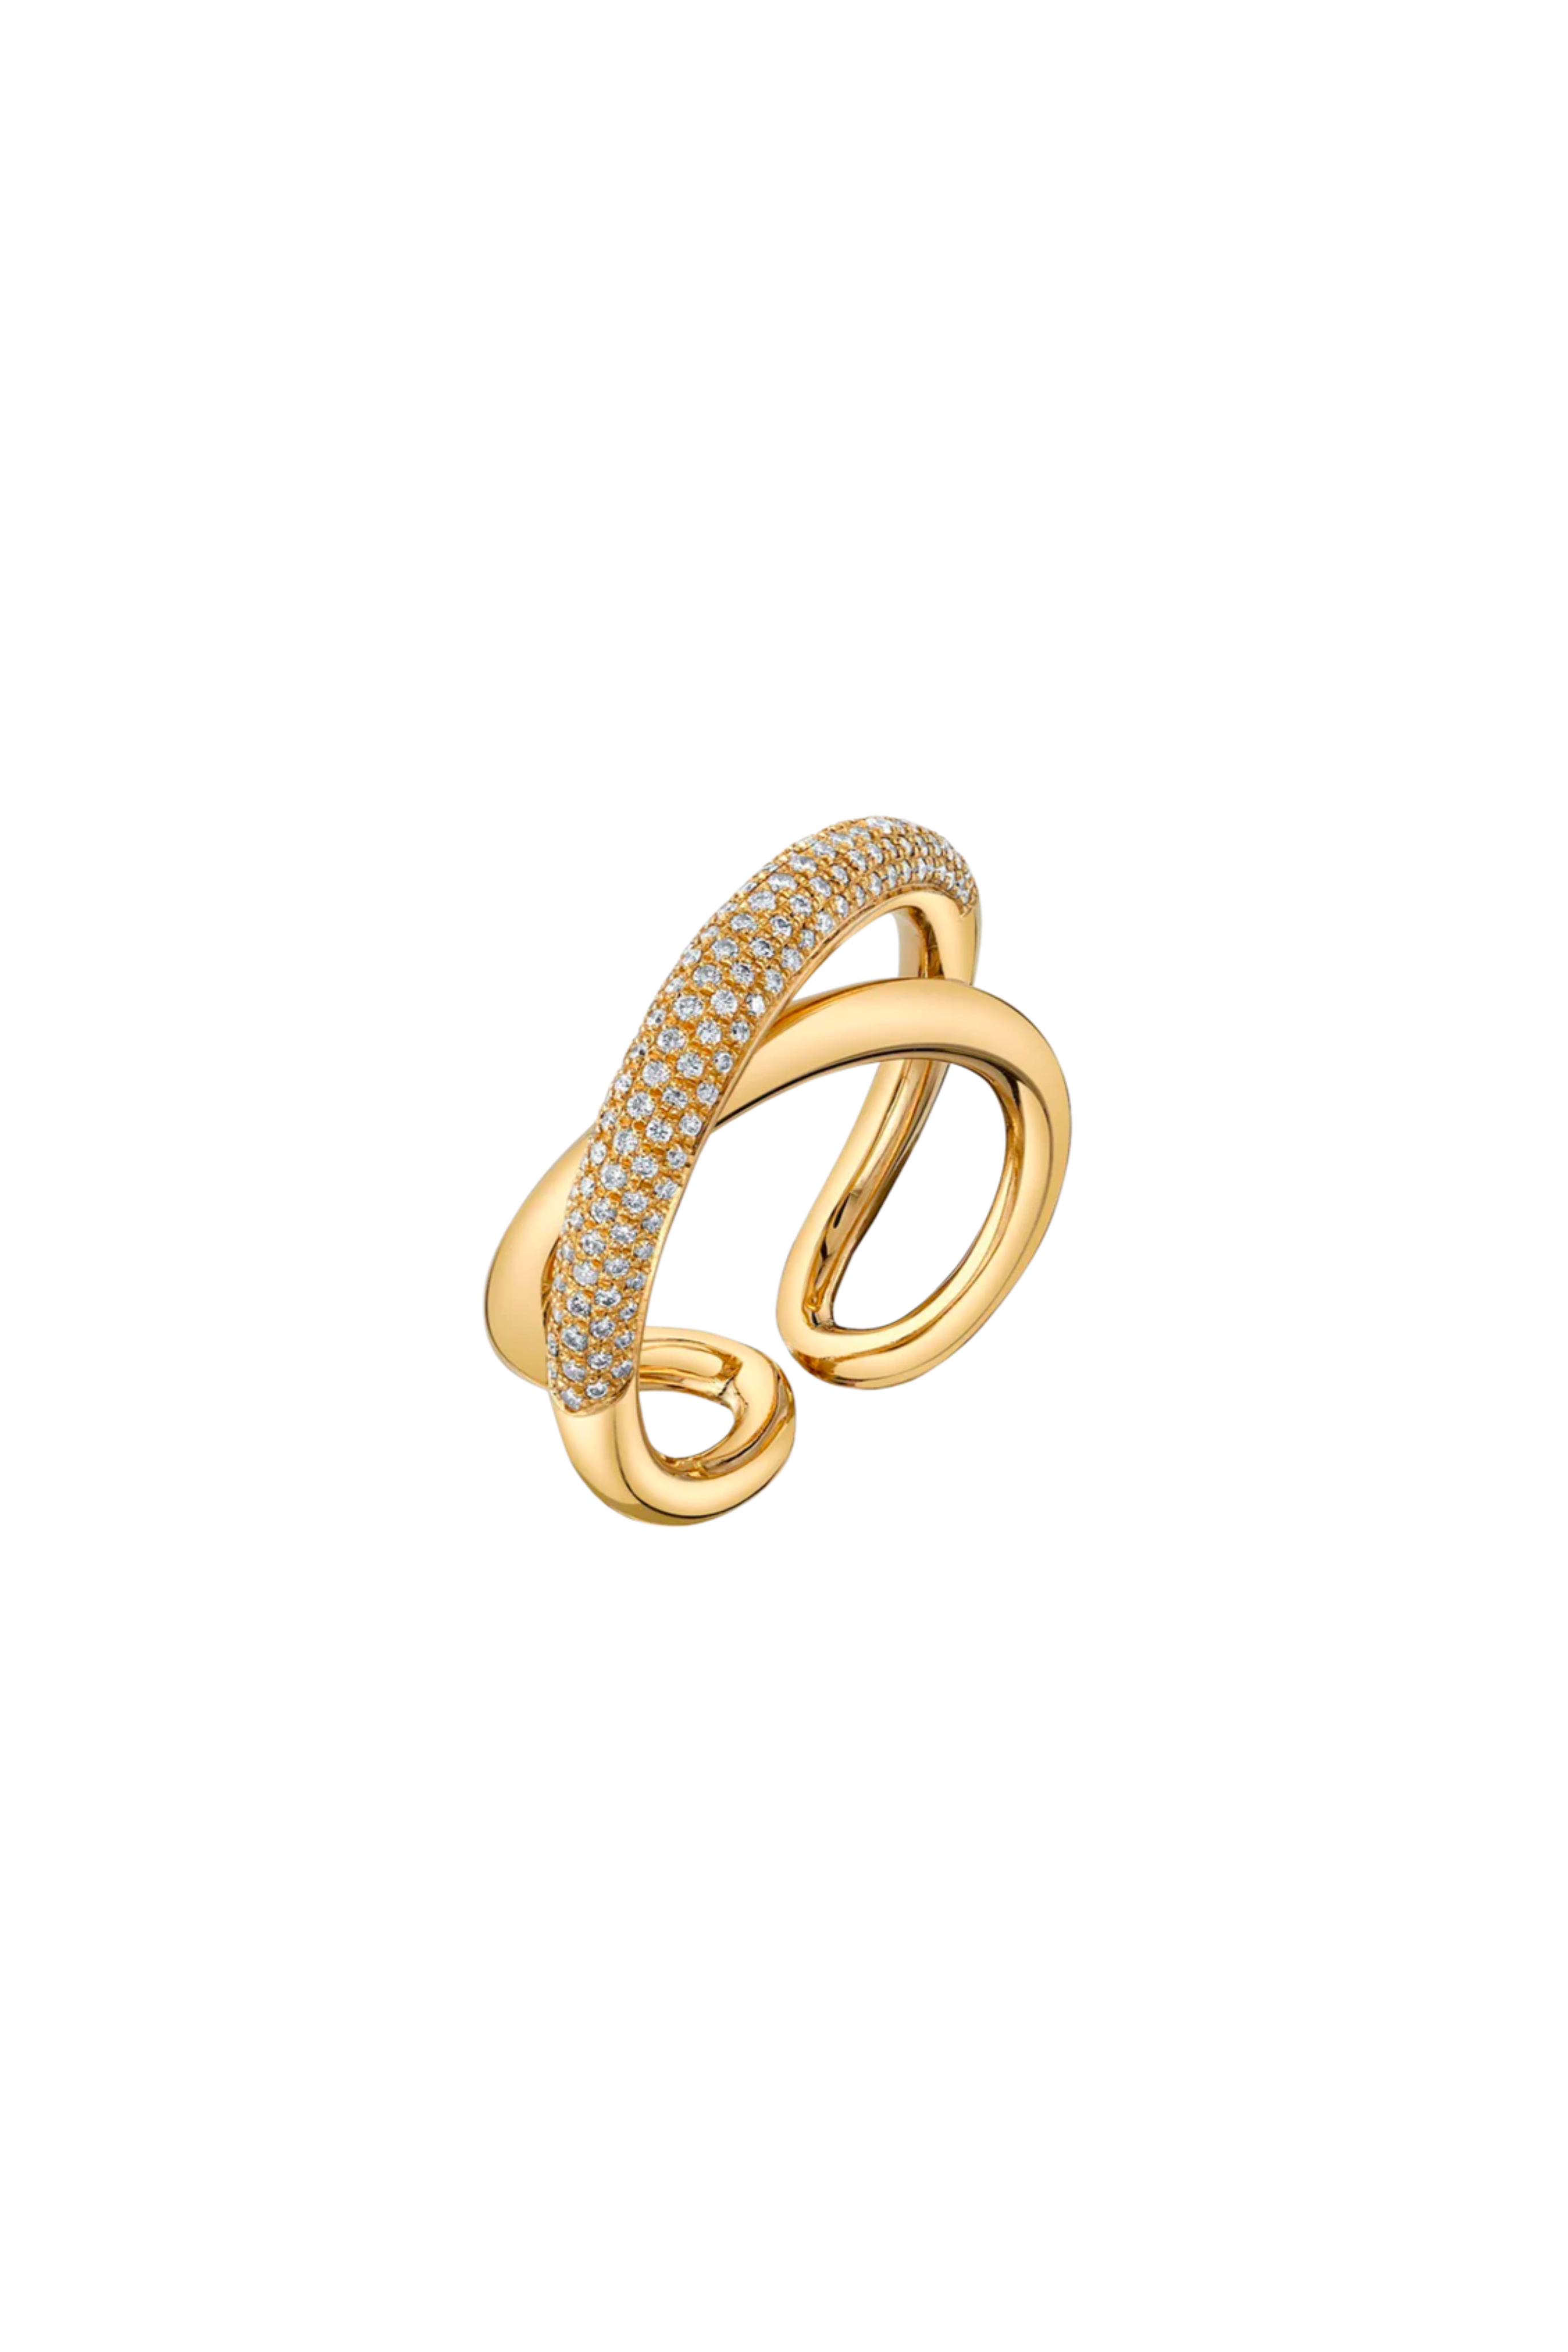 Gabriela Artigas Twisted Pave Diamond Ring